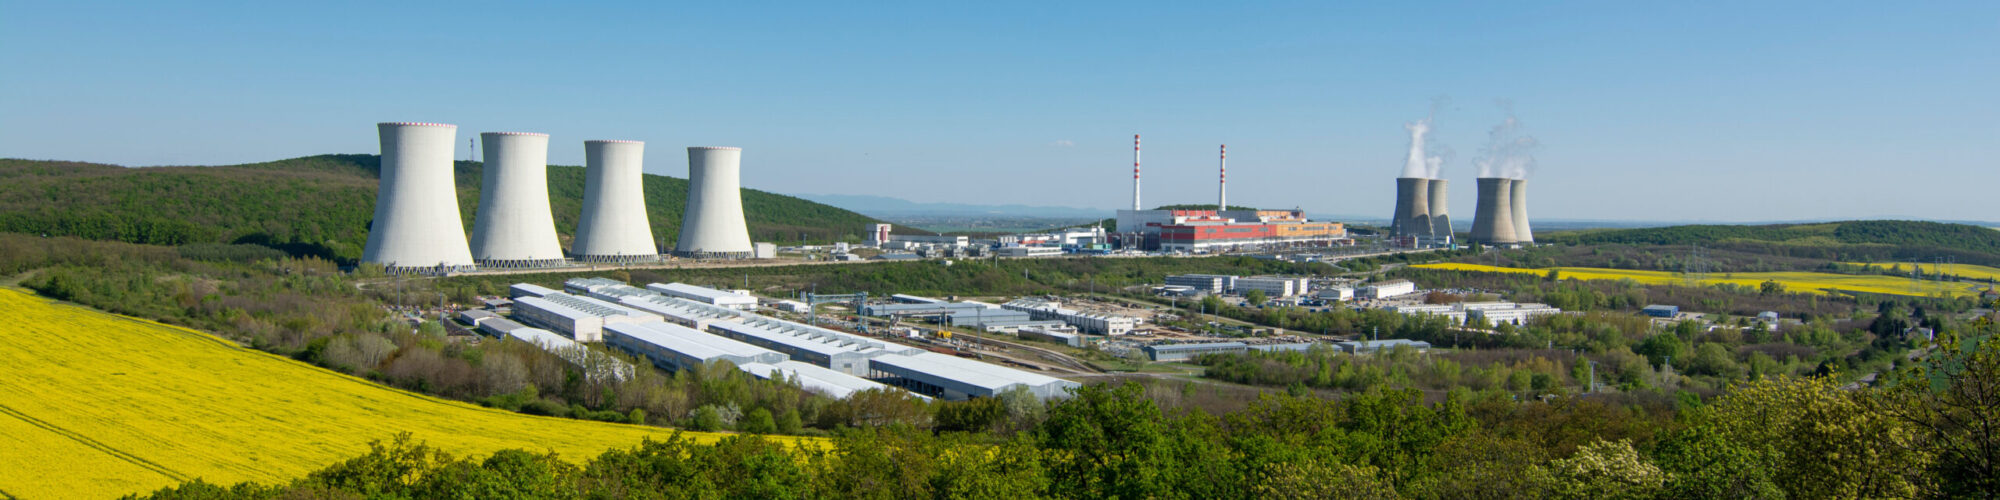 production usine